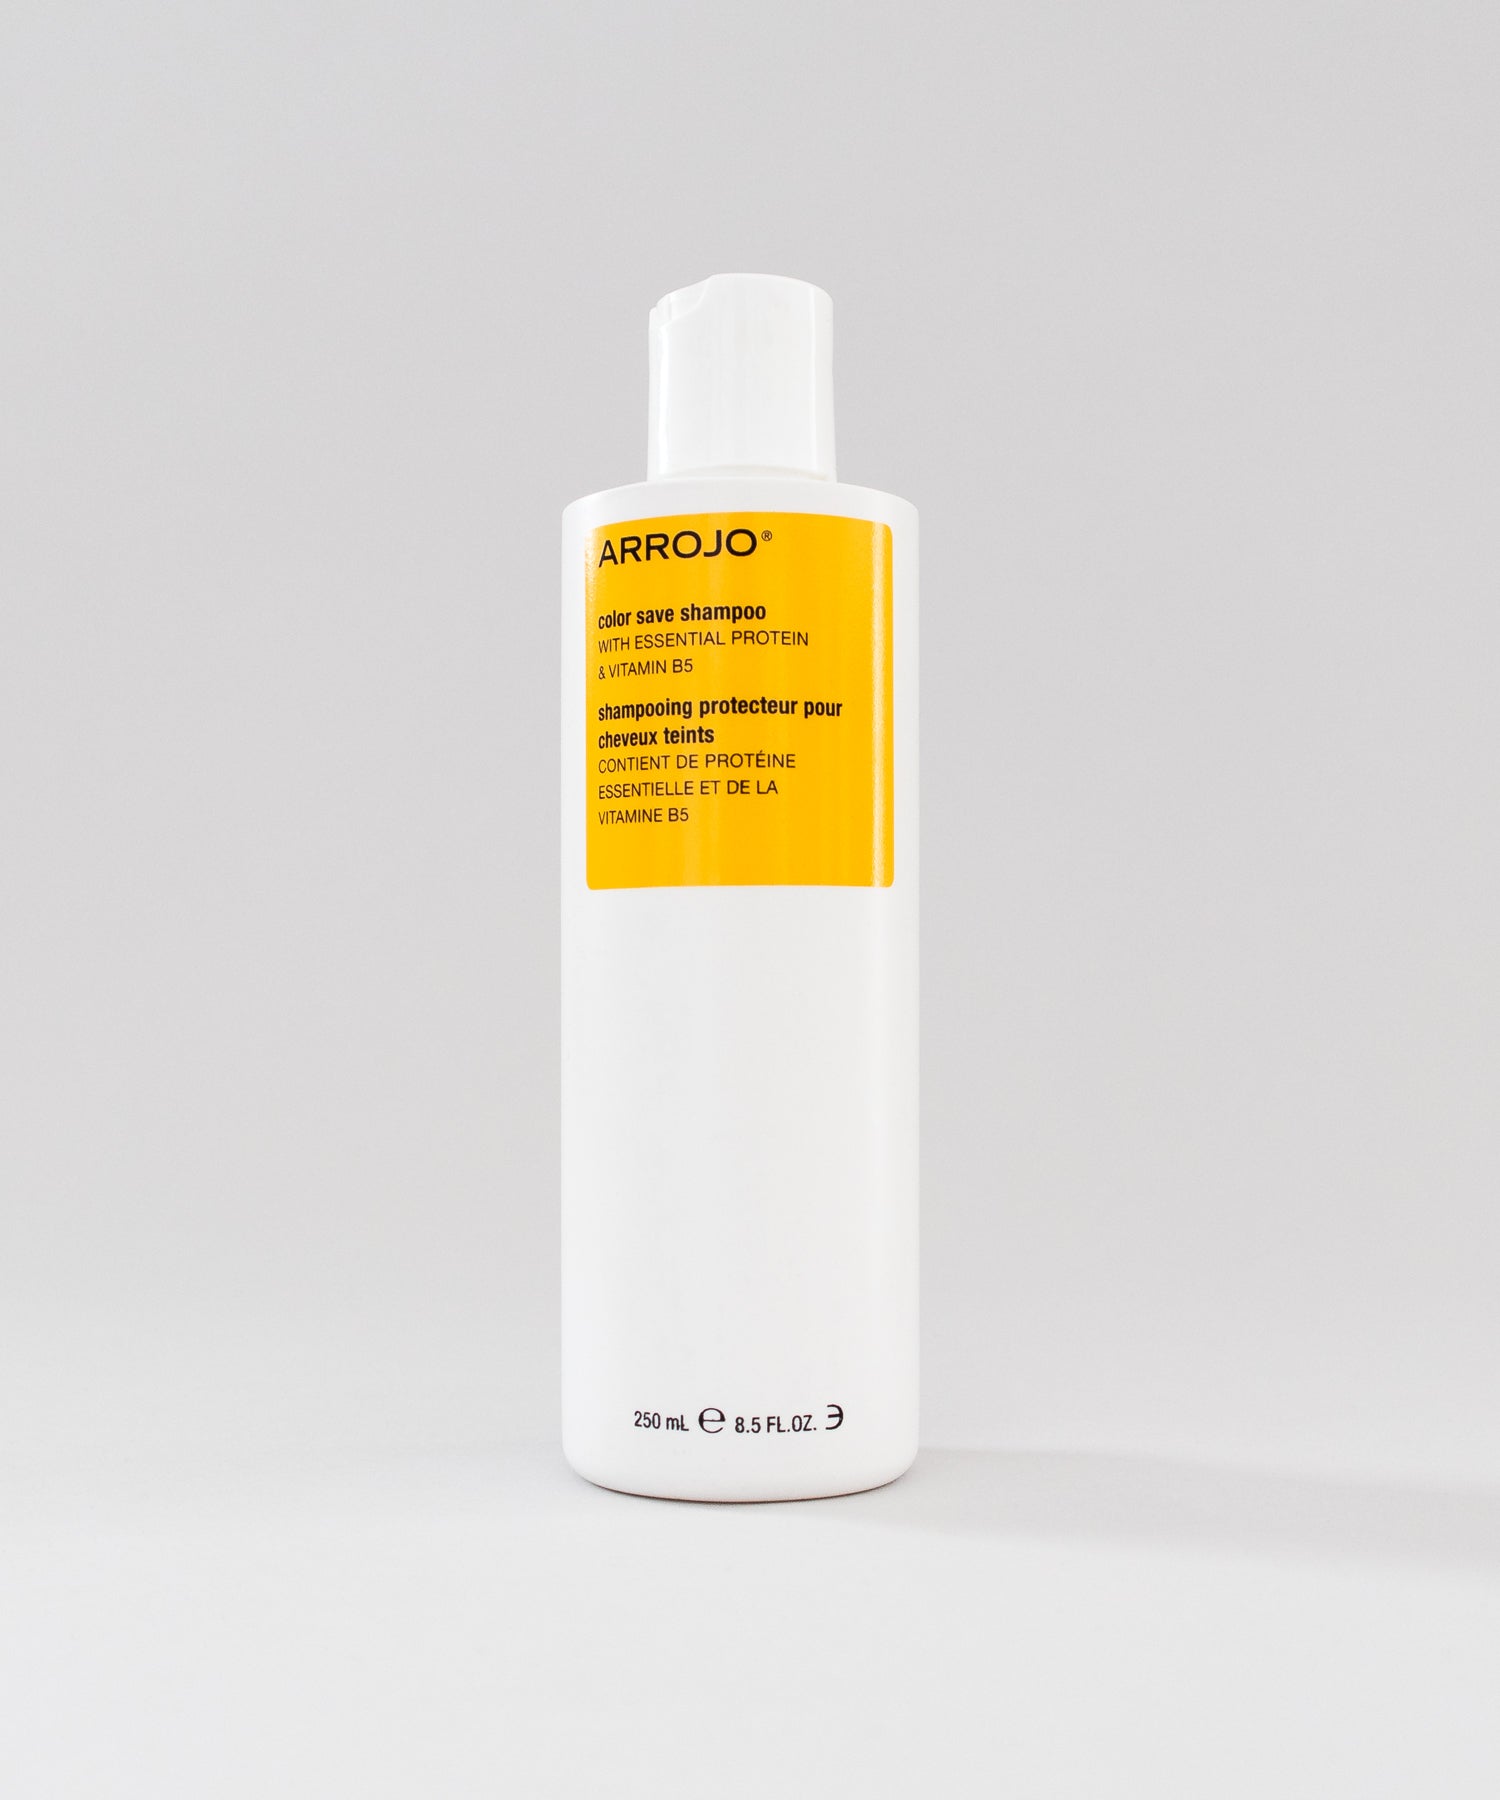 Arrojo Color-preserving shampoo for gentle lightweight moisturizing